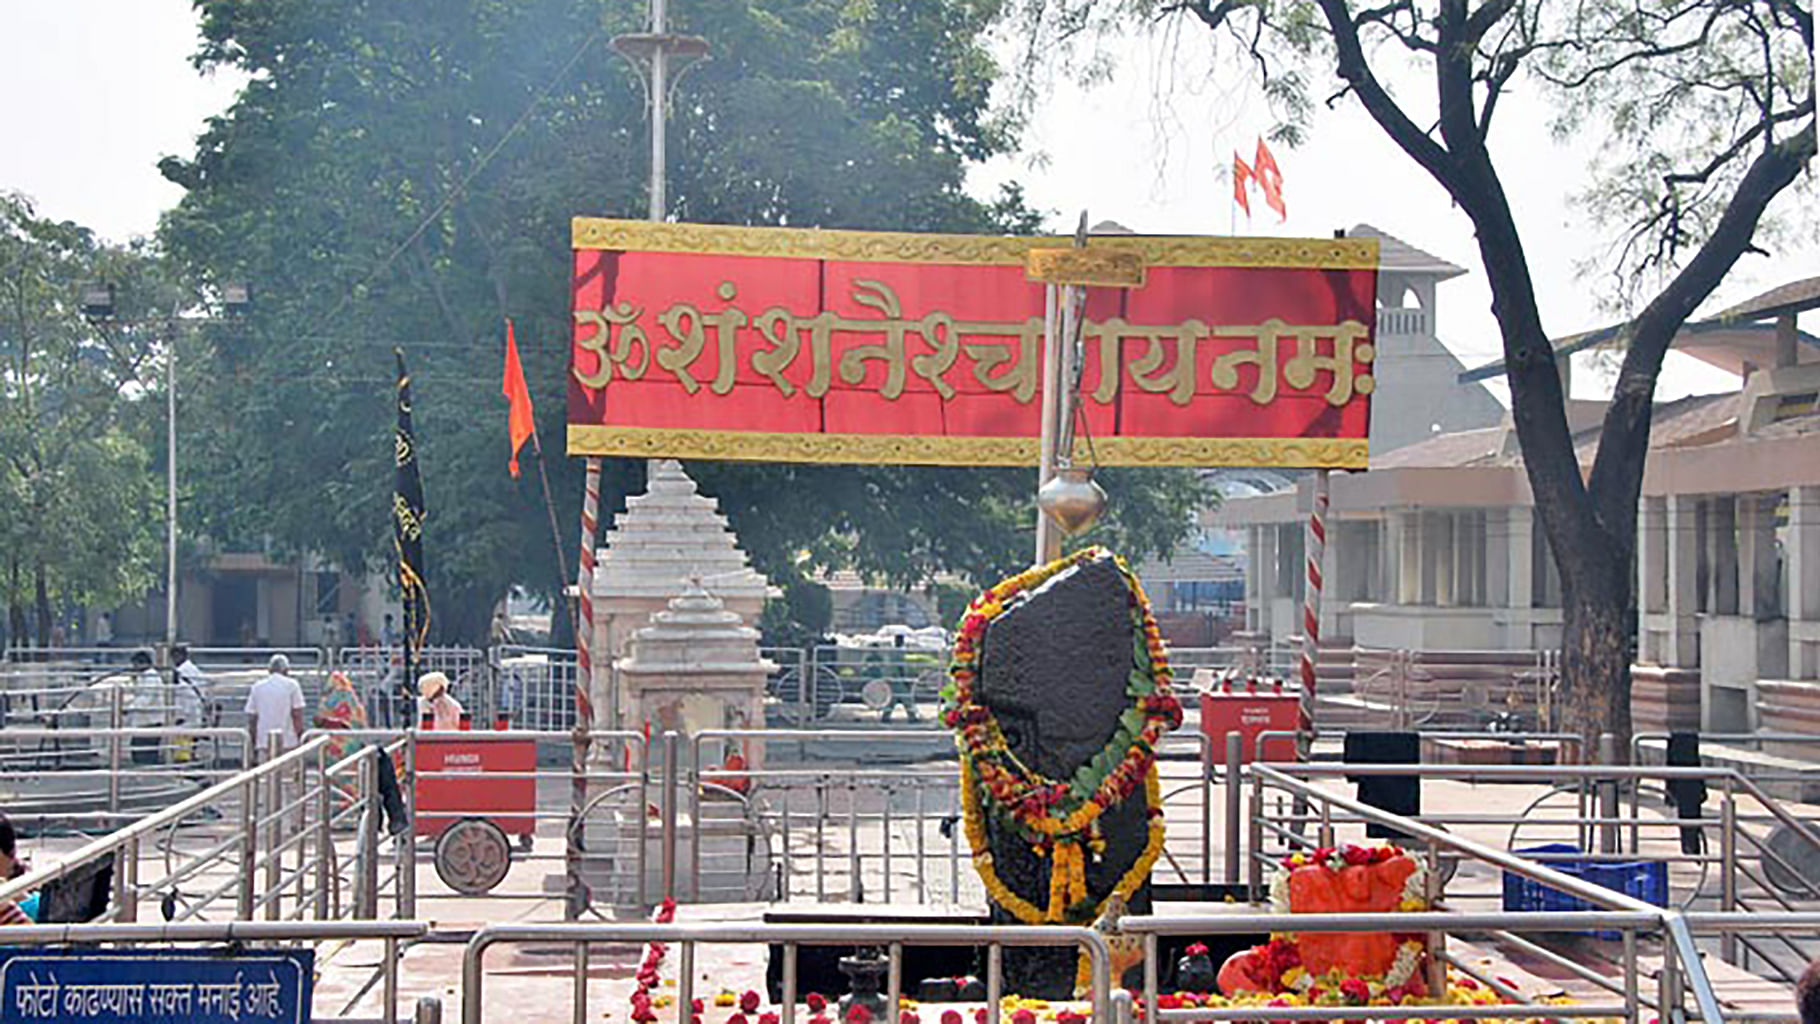 The Shani Shingnapur Temple. (Photo: <a href="http://shanishinganapur.com/">shanishinganapur.com</a>)